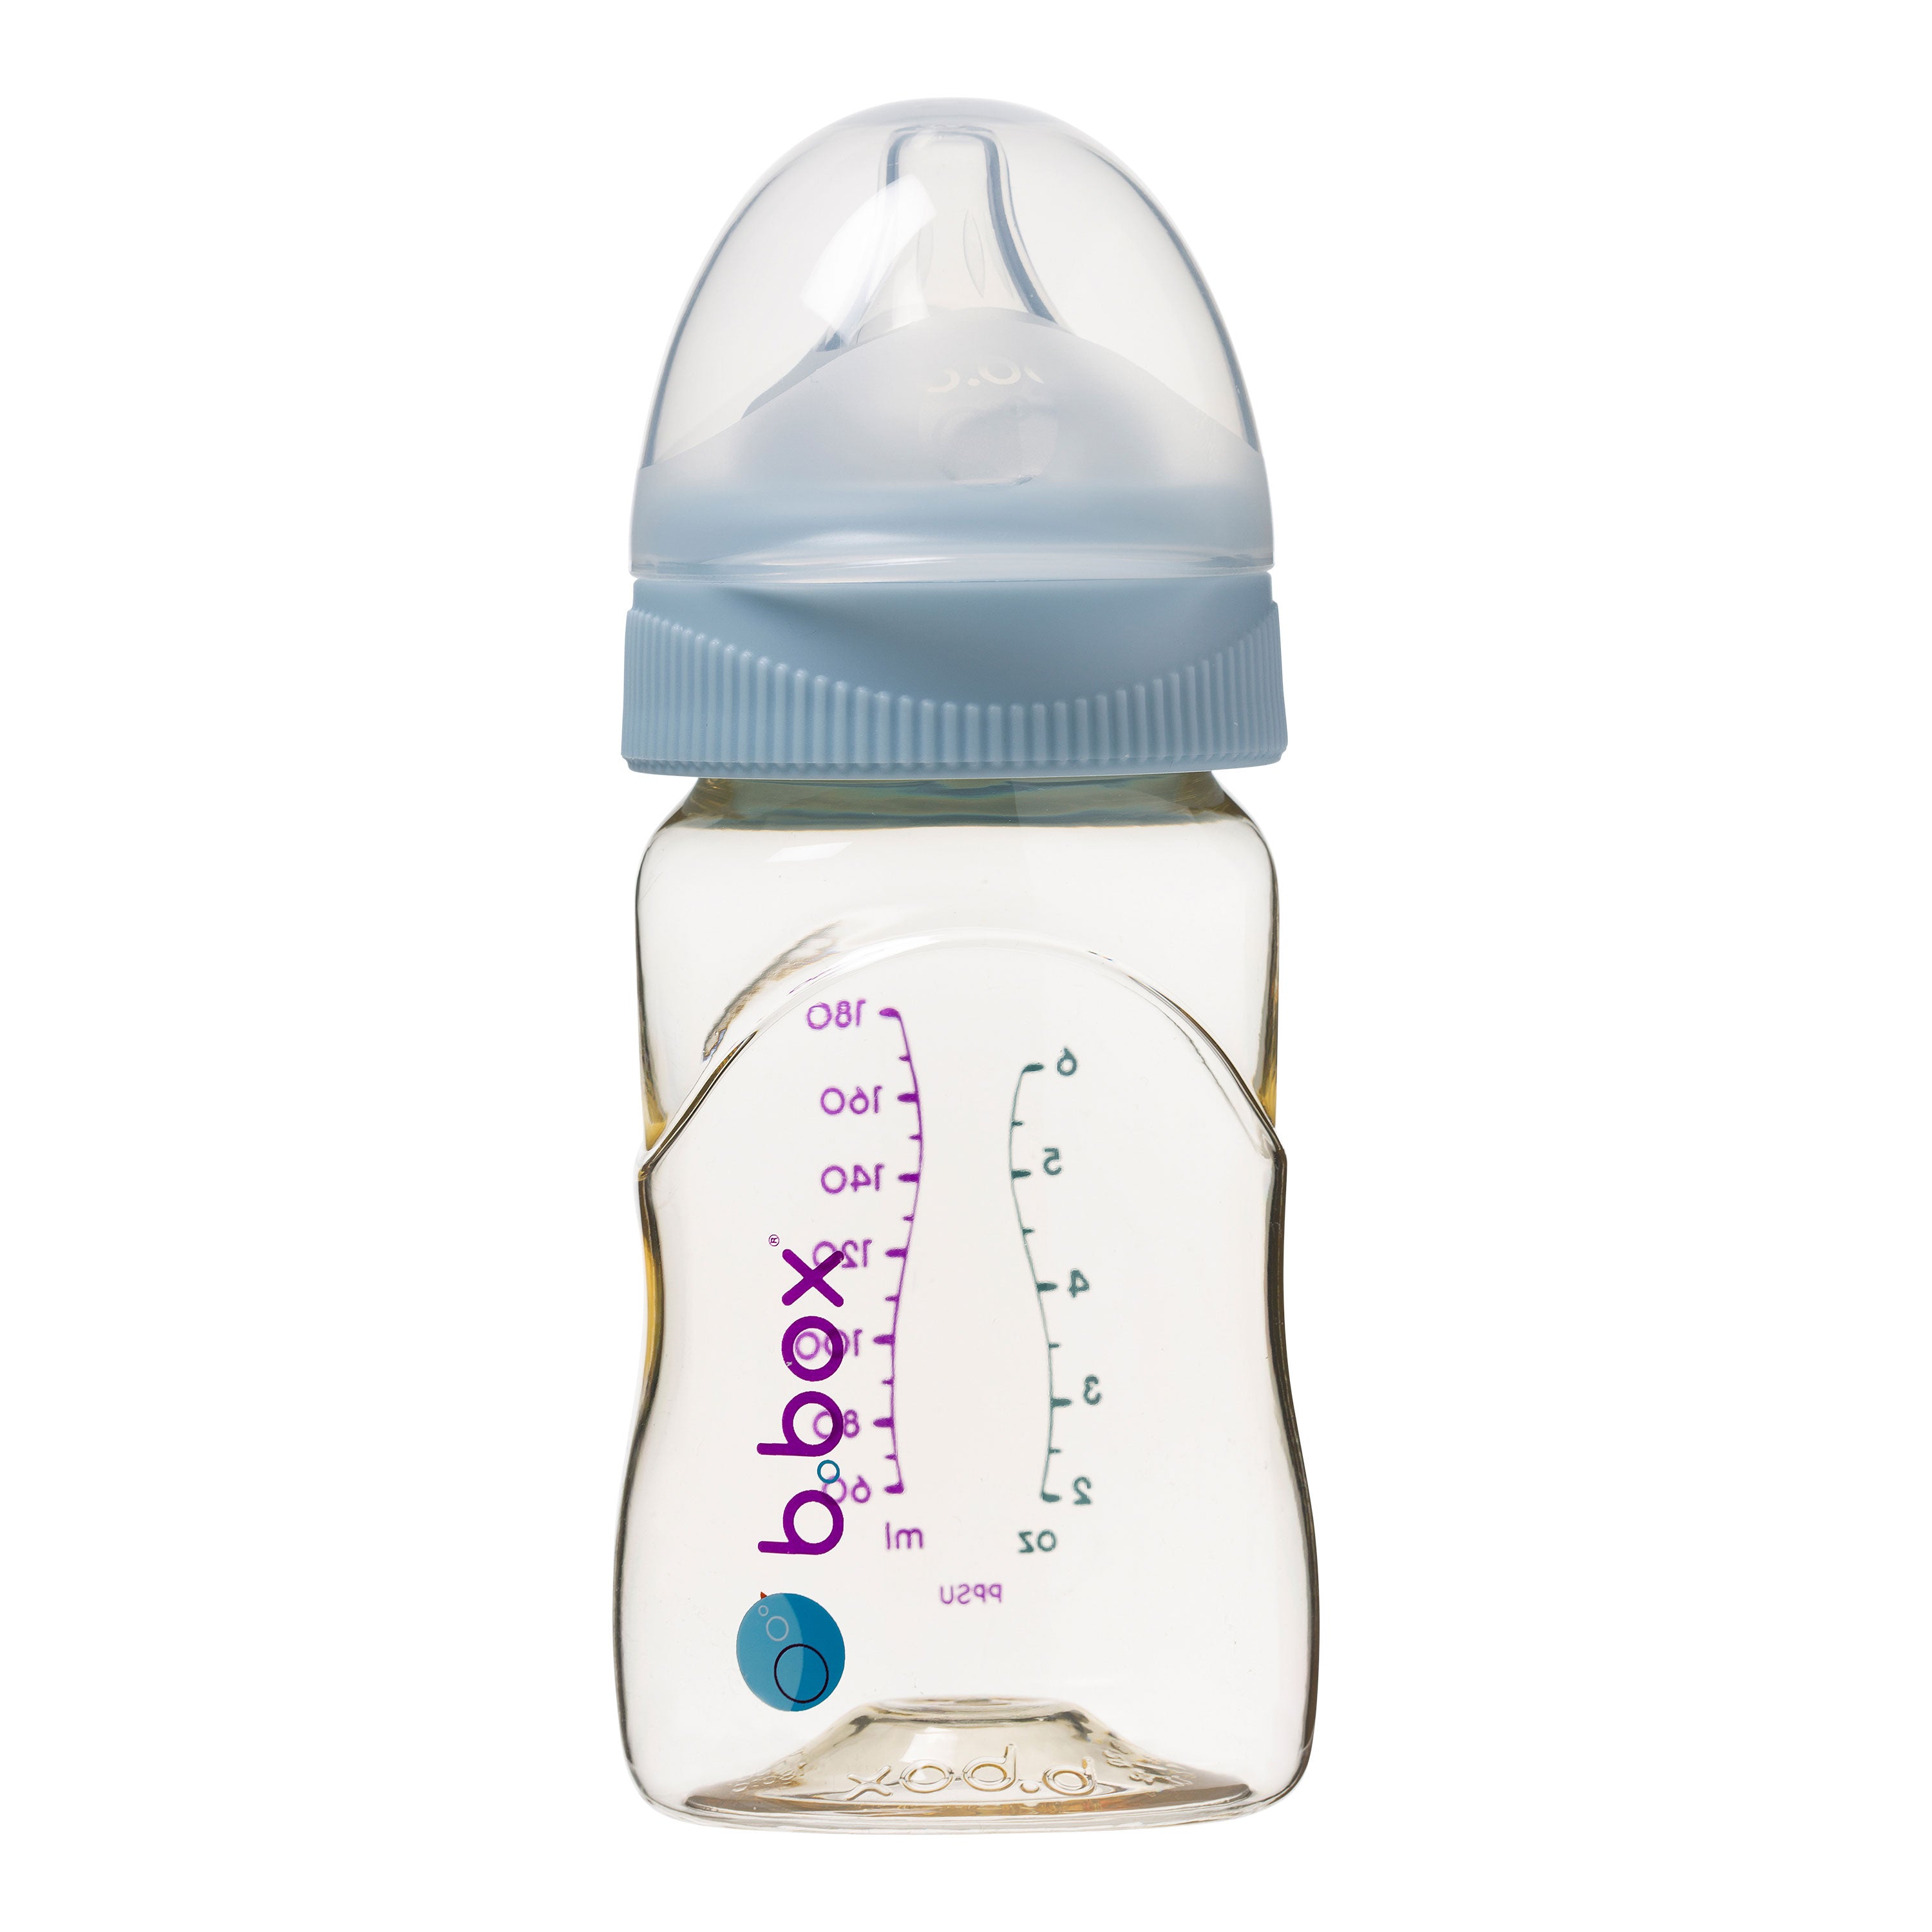 PPSU製哺乳瓶 180ml/PPSU Baby Bottle 180ml - Lullaby Blue